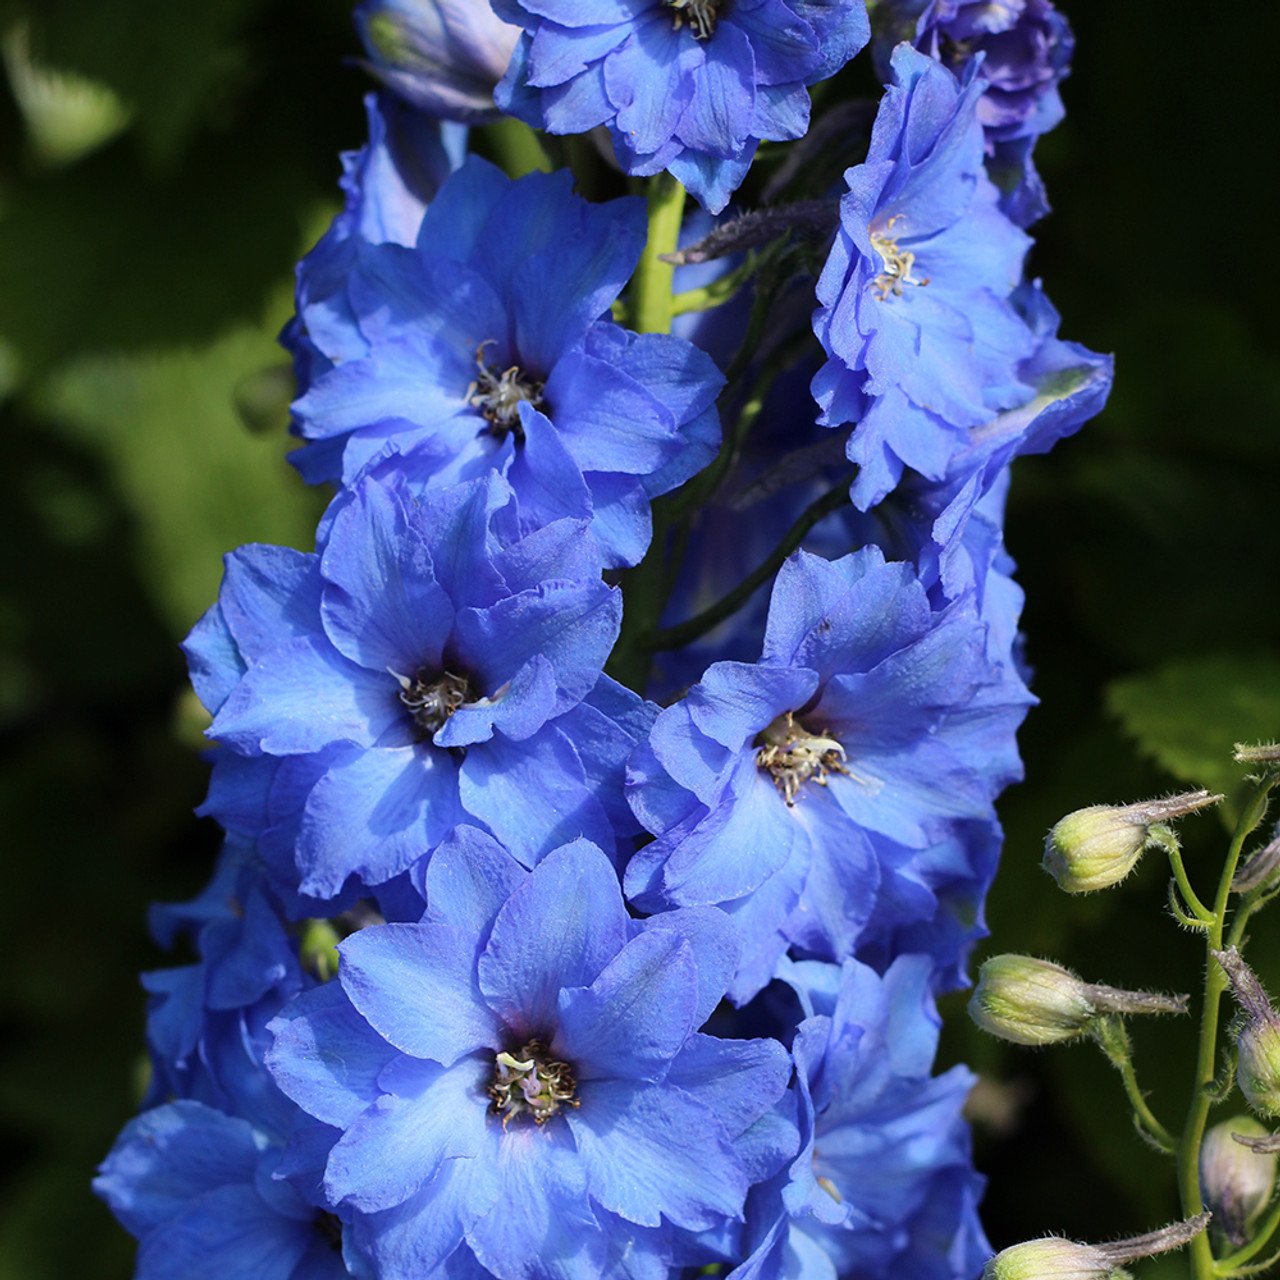 Beautiful Blue Delphinium (Delphinium elatum) blossom showcasing its vivid blue color and delicate petals.